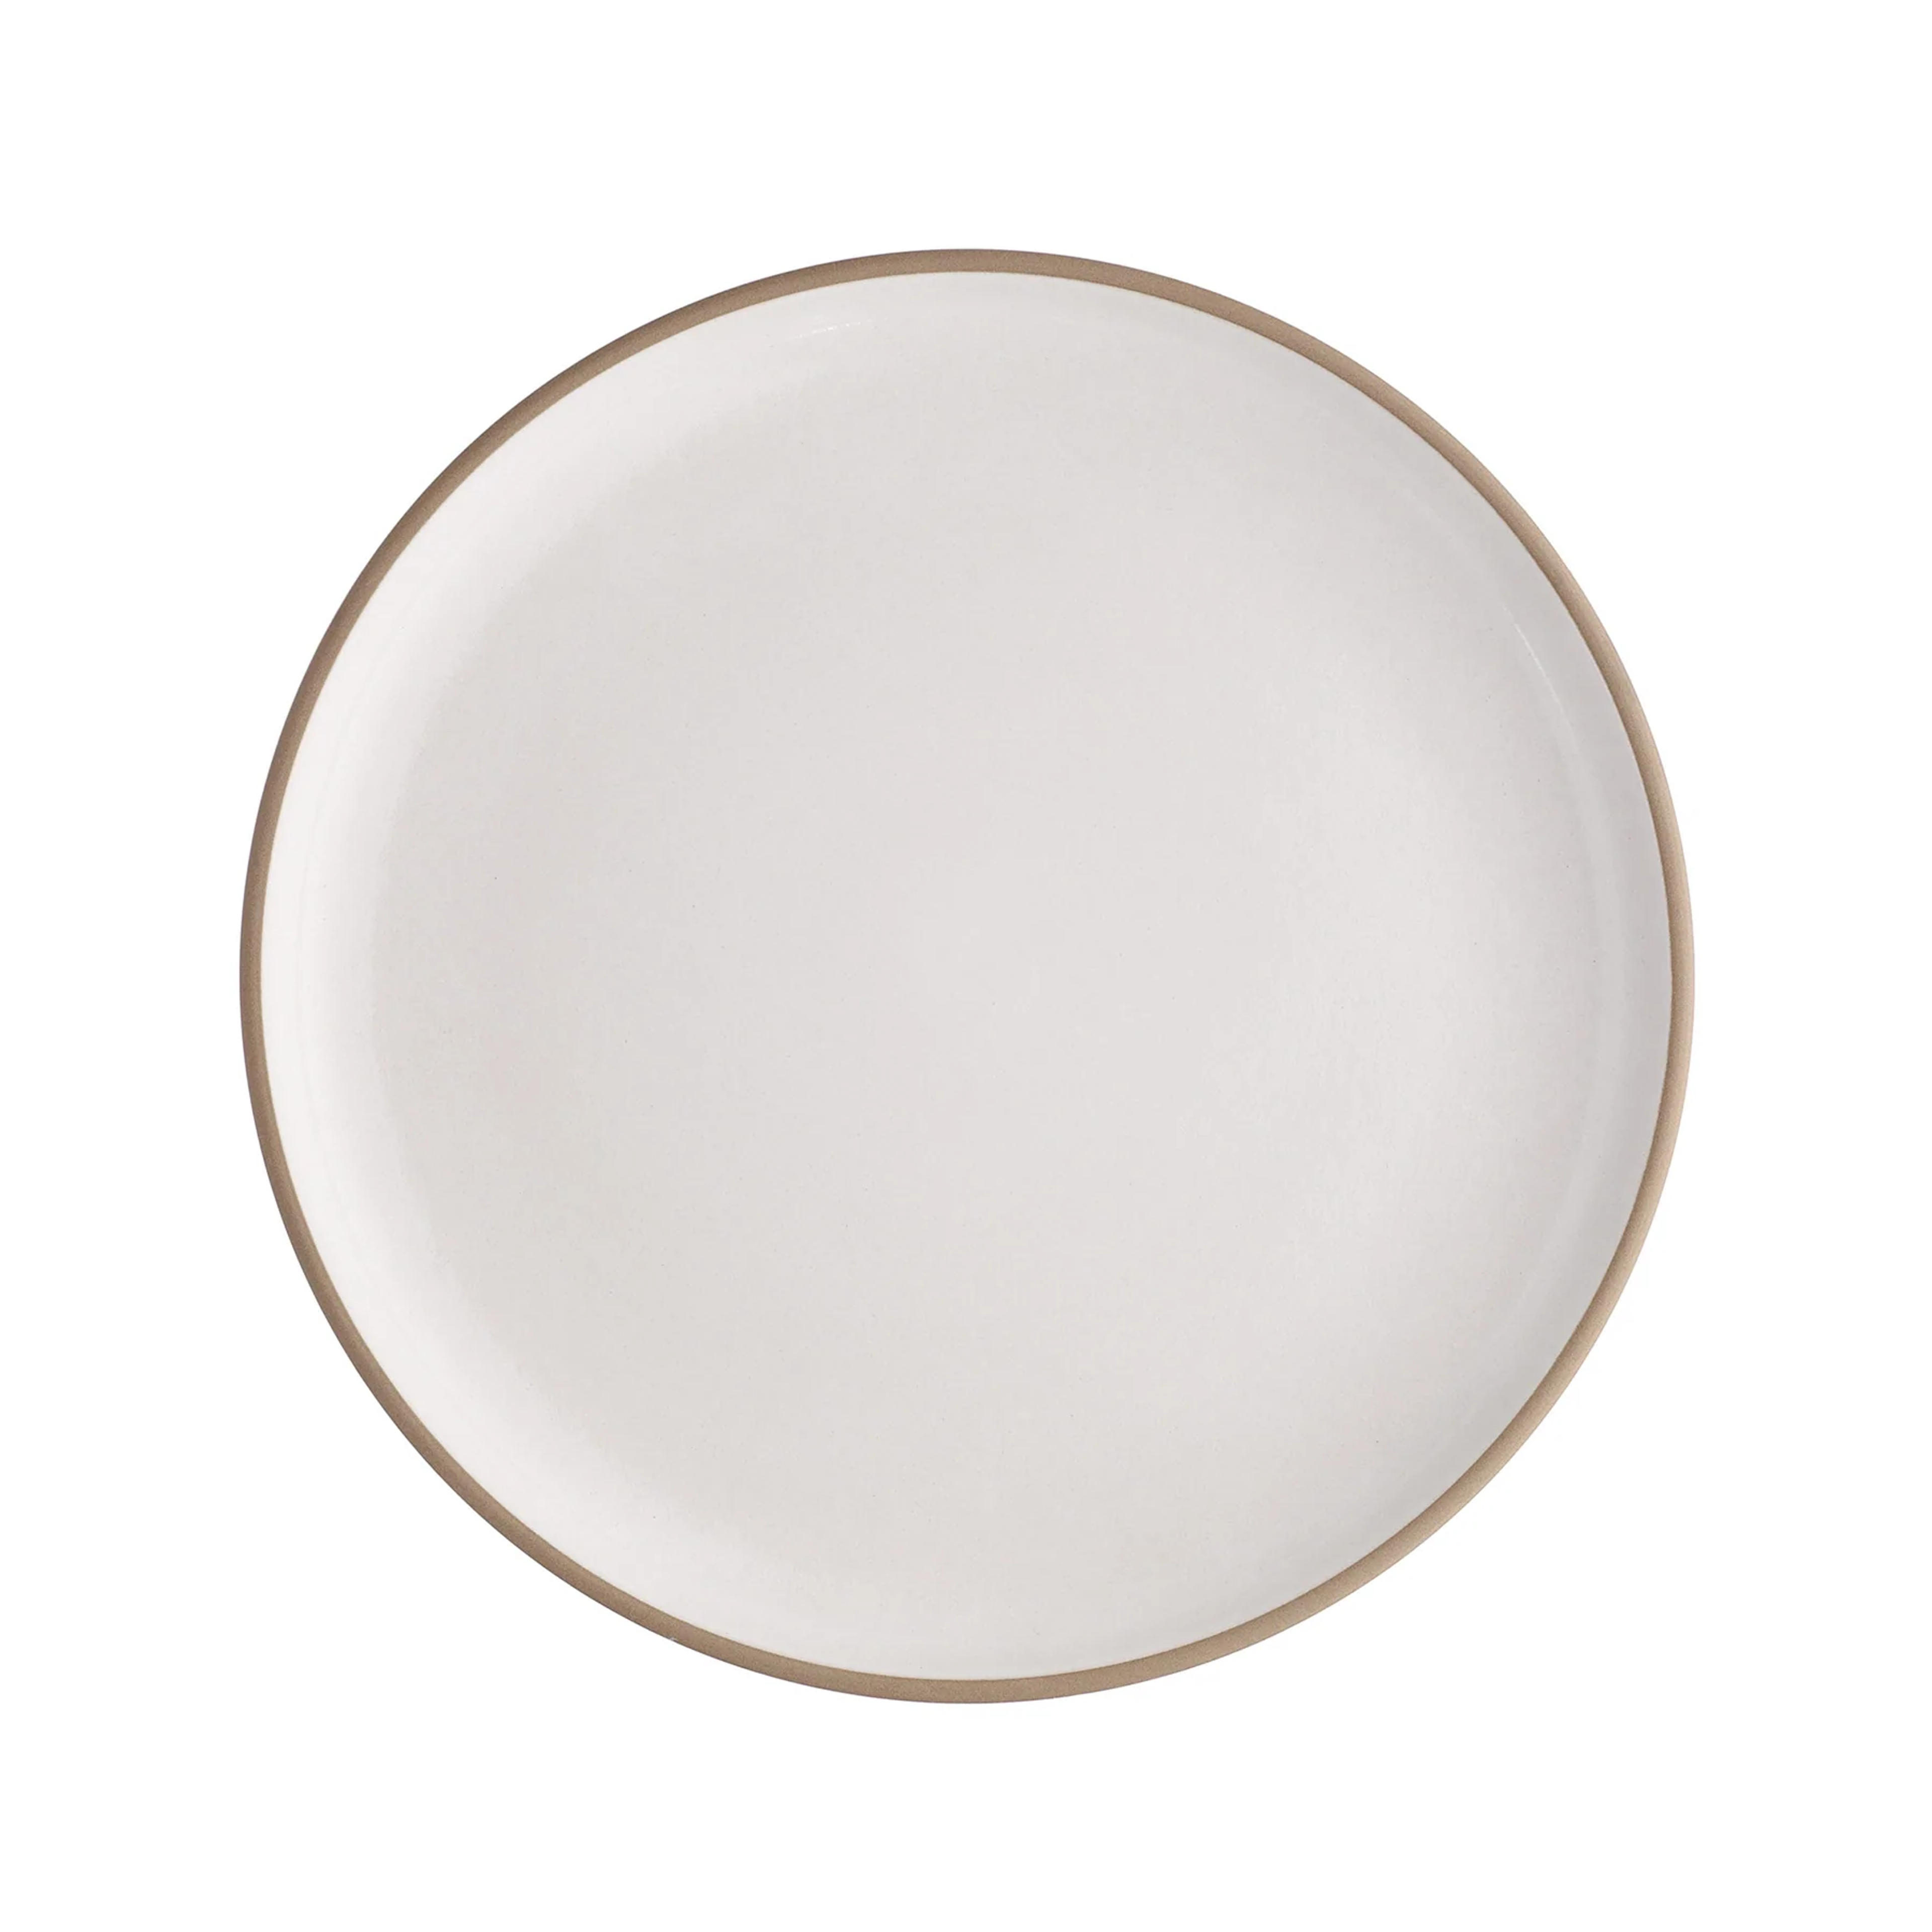 Serving Platter - Opaque White